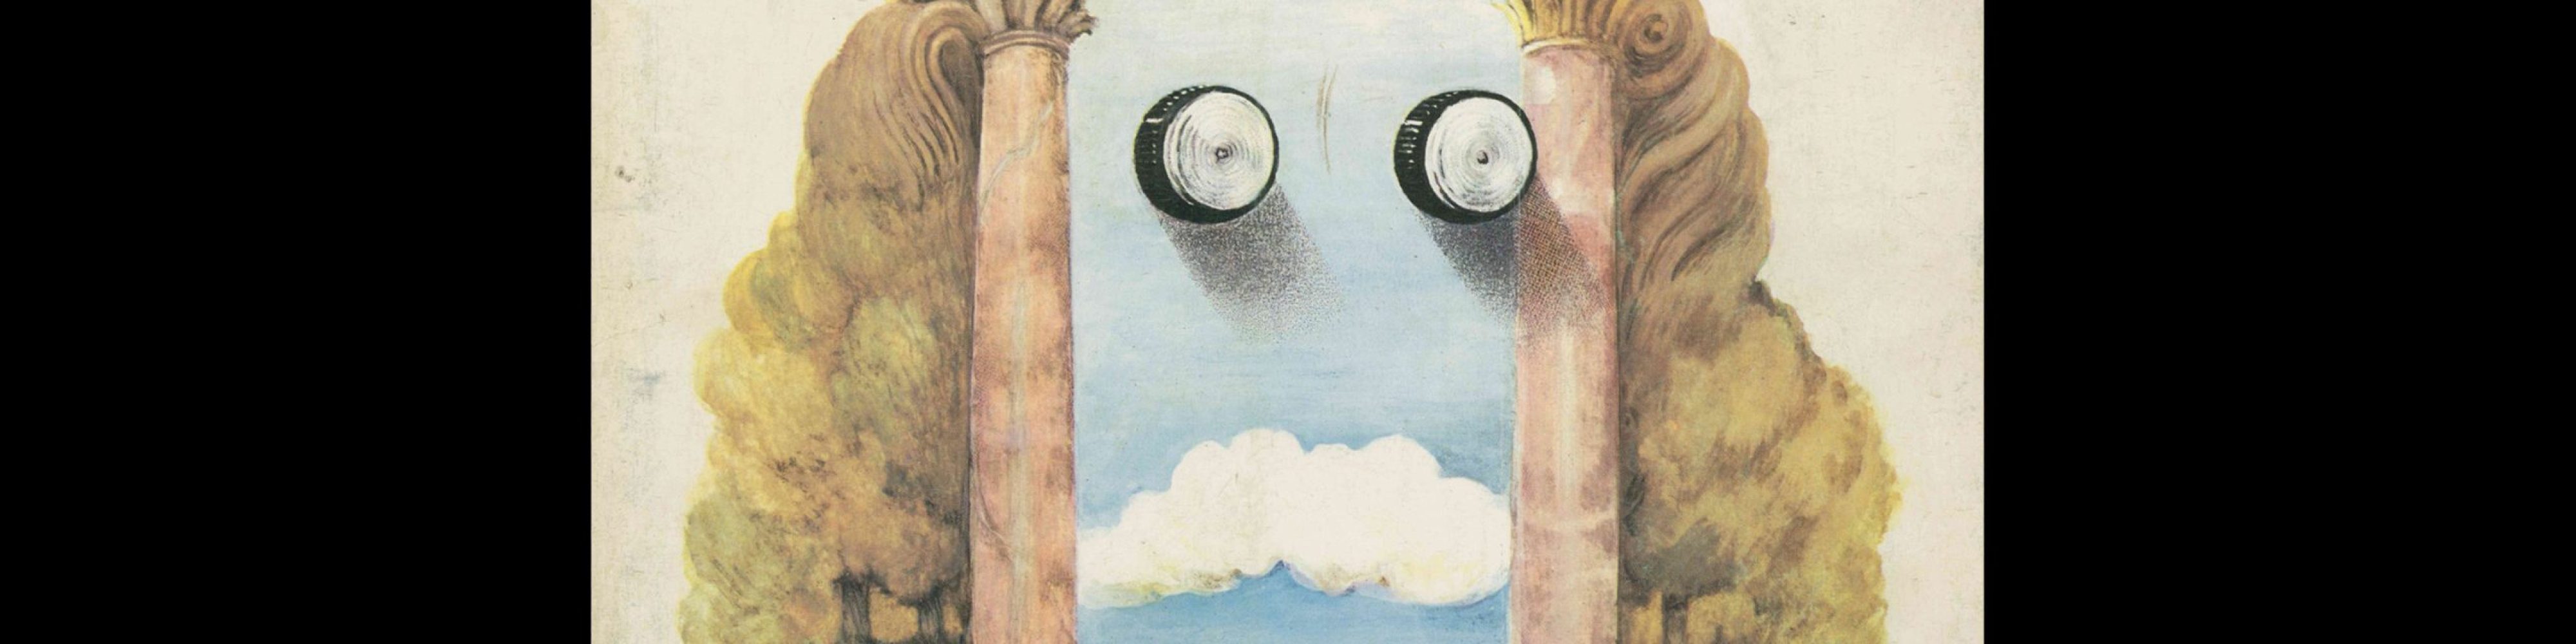 Projekt 98, 1, 1974. Cover design by Maciej Urbaniec